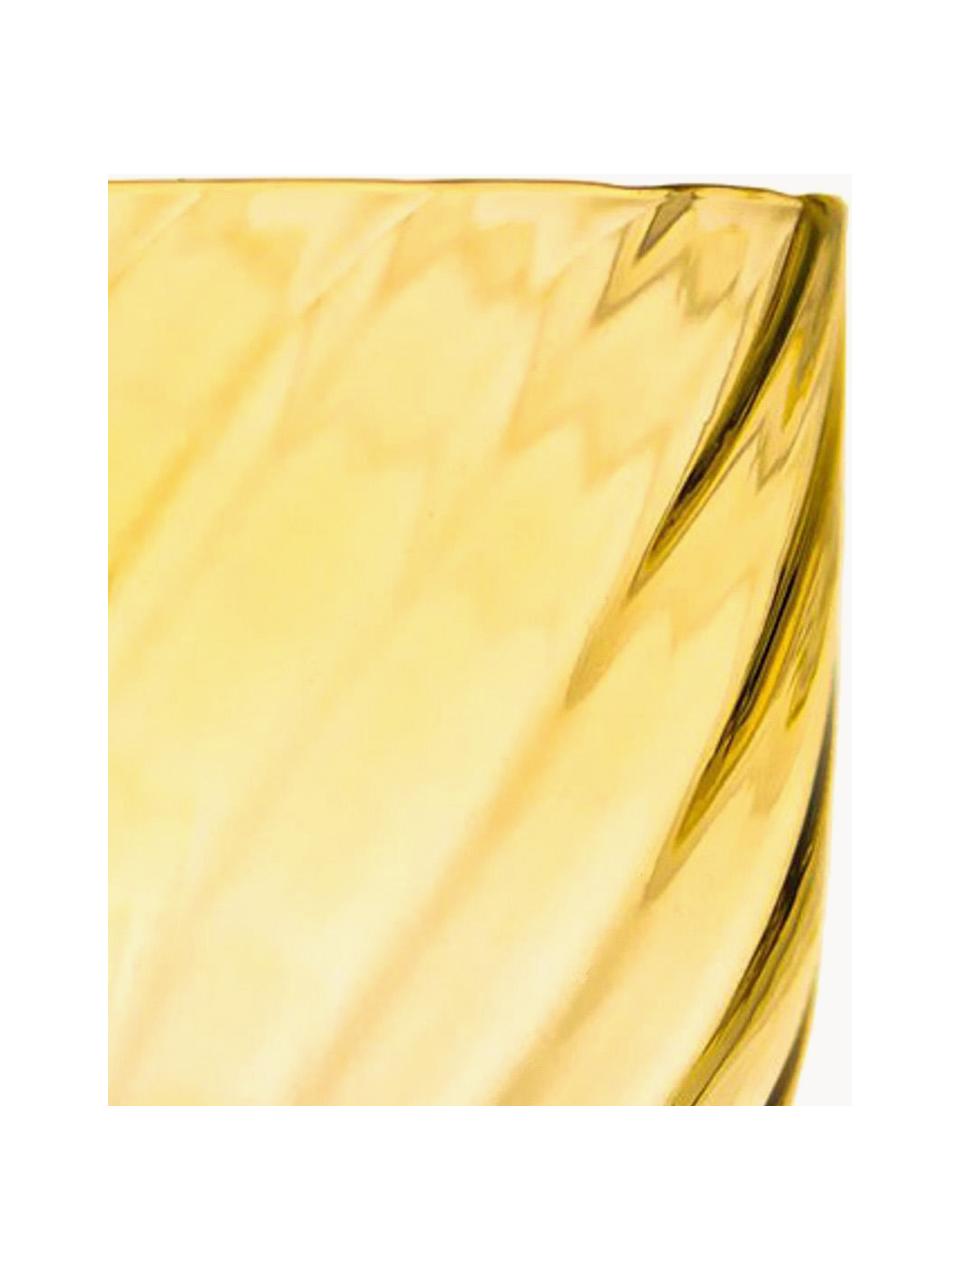 Set de vasos artesanales Swirl, 6 uds., Vidrio, Amarillo limón transparente, Ø 7 x Al 10 cm, 250 ml